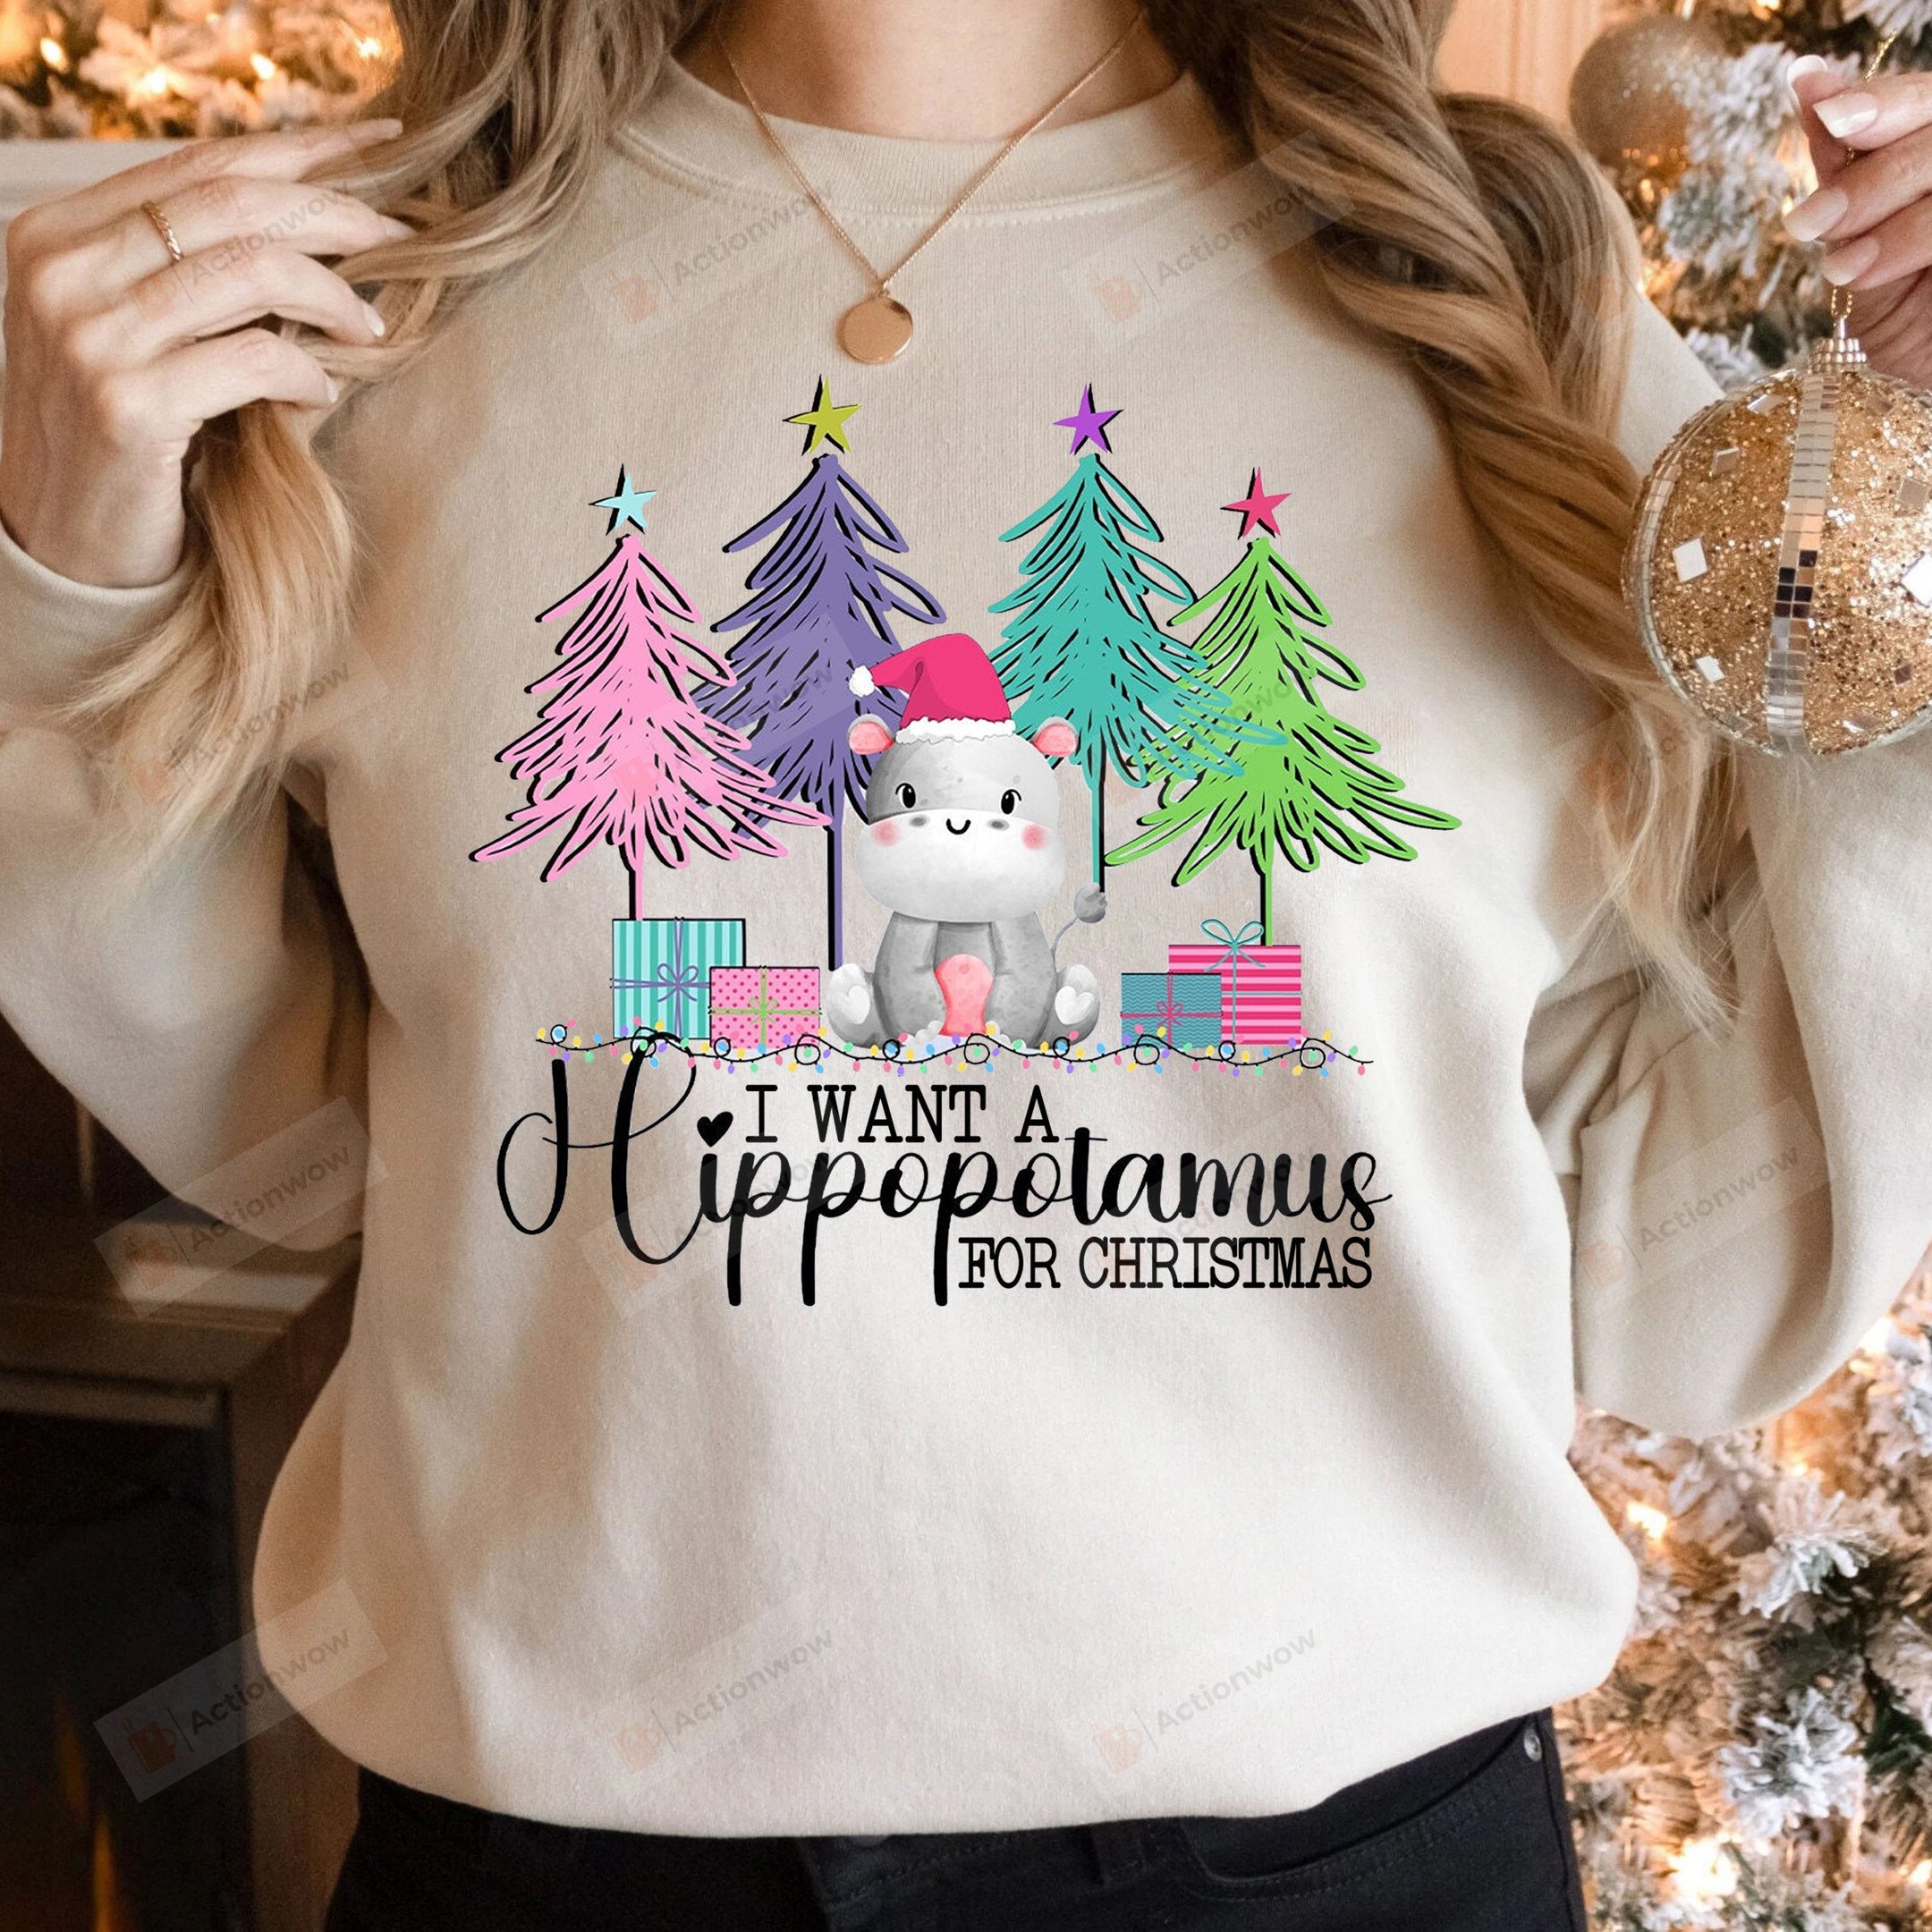 I Want A Hippopotamus For Christmas Shirt Gifts For Woman, I Want A Hippopotamus For Christmas Sweatshirt